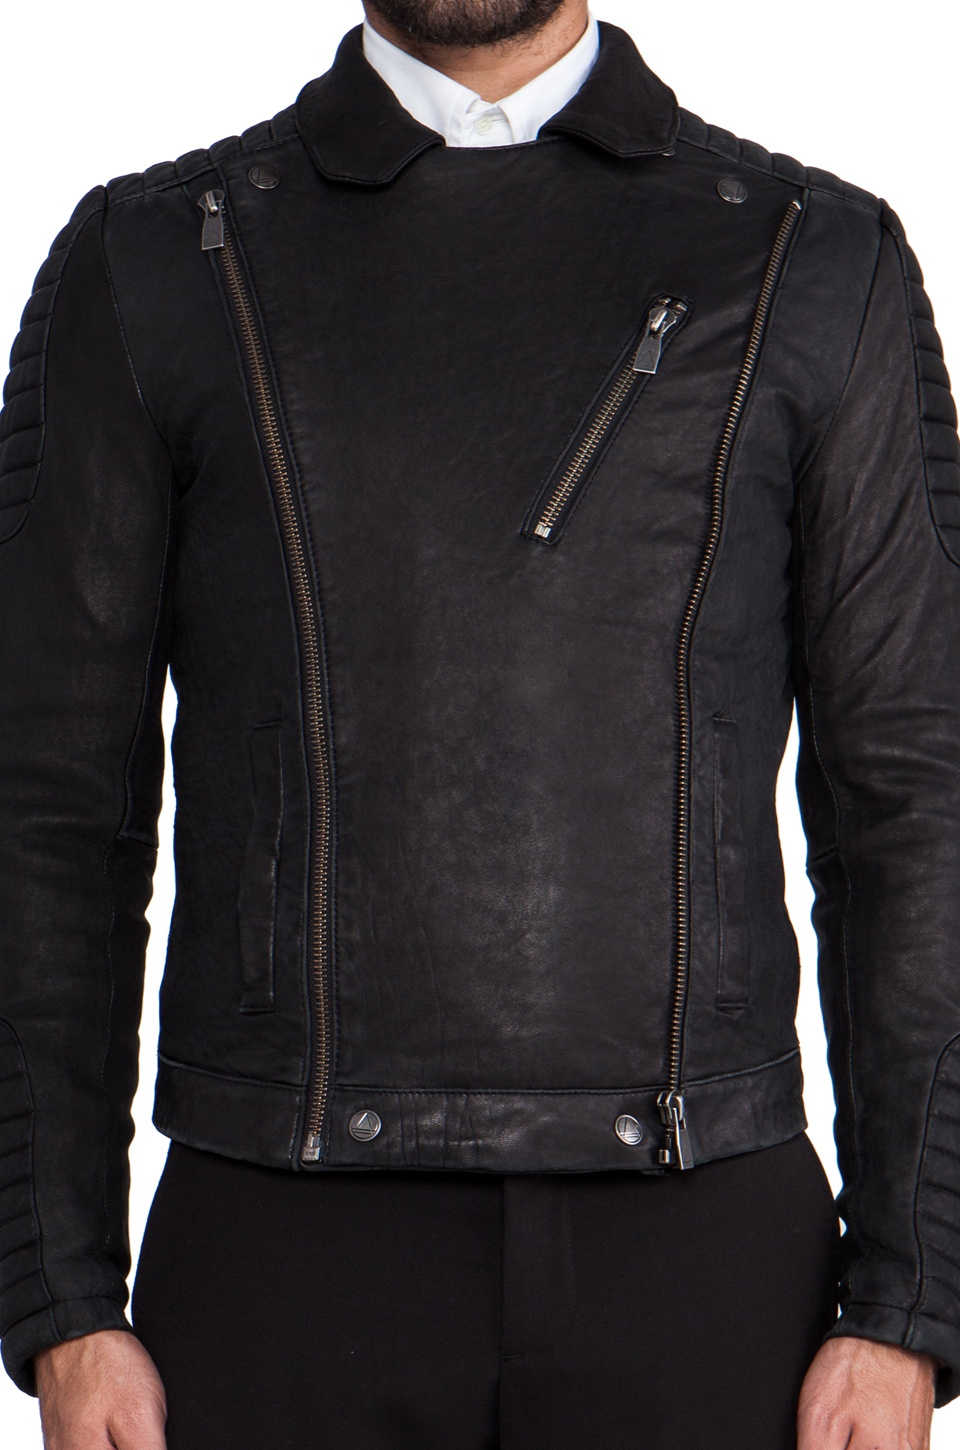 ELEVEN PARIS Leather Jacket in Black for Men - Lyst